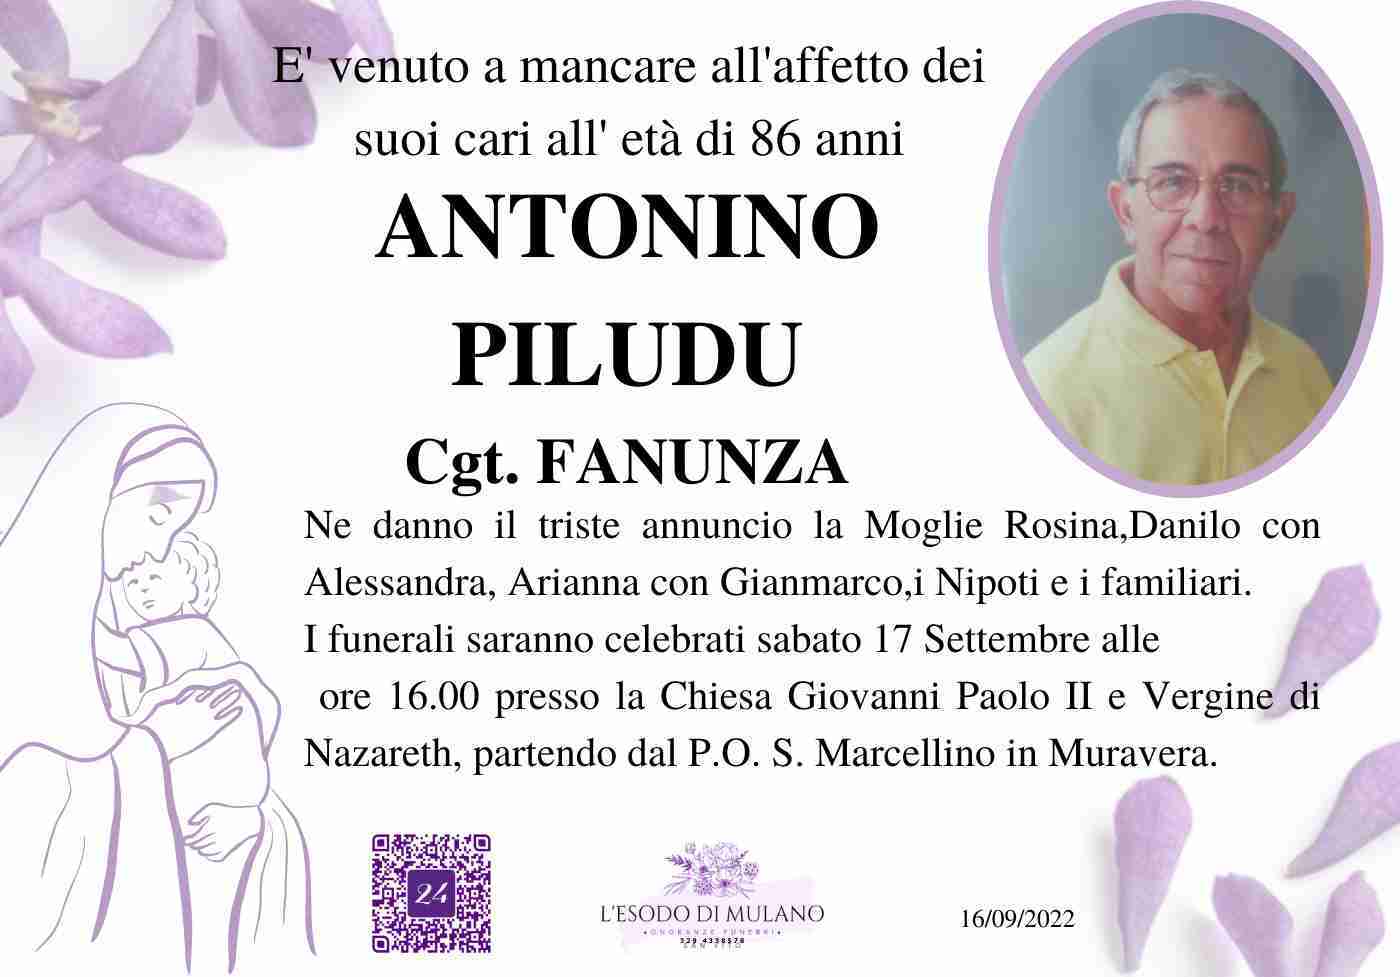 Antonino Piludu